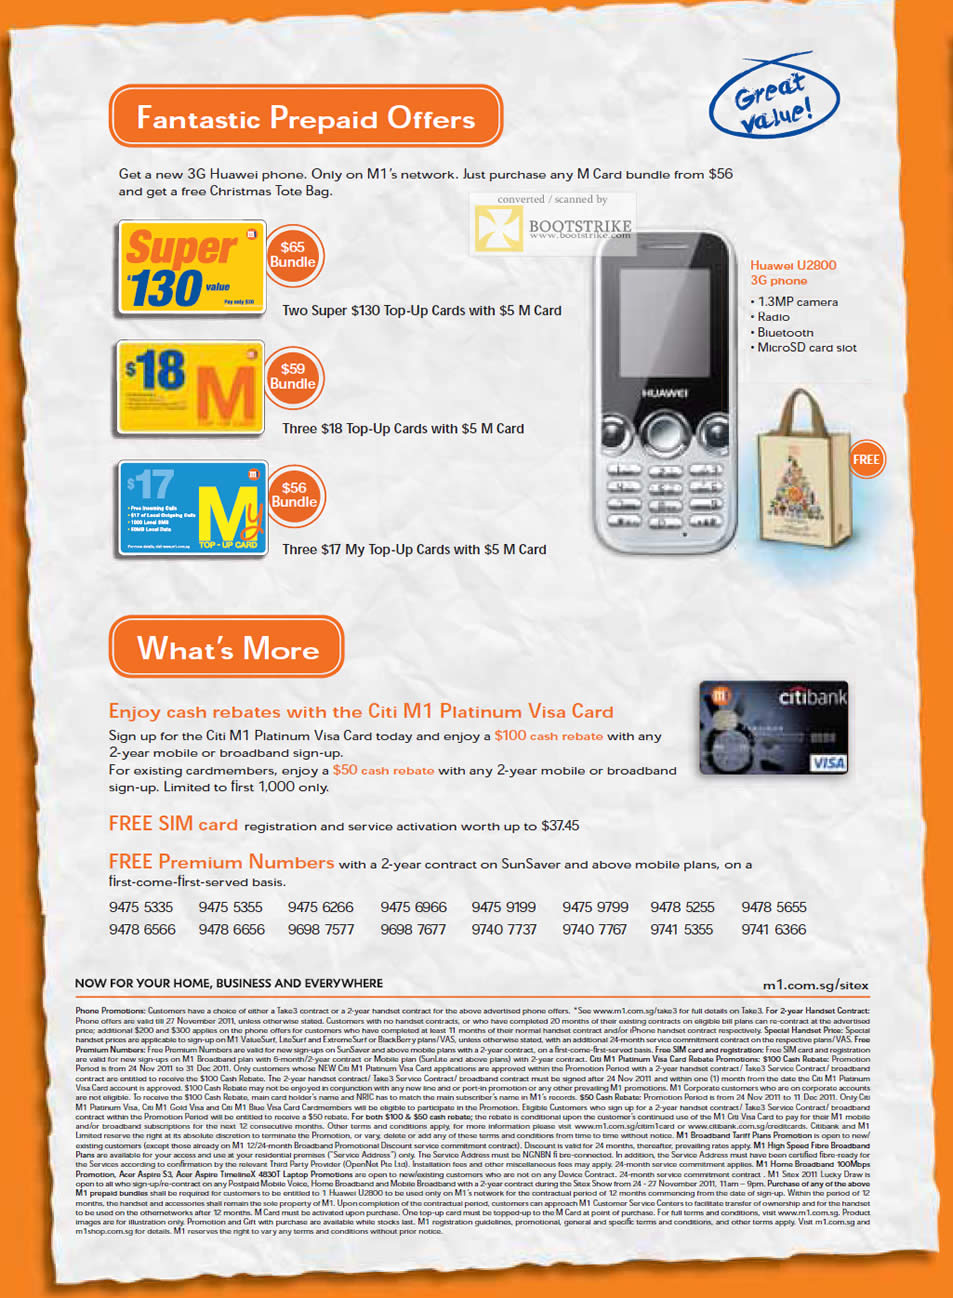 SITEX 2011 price list image brochure of M1 M Card Prepaid, Super 130, Huawei U2800 3G Phone, Citi M1 Platinum Visa Card